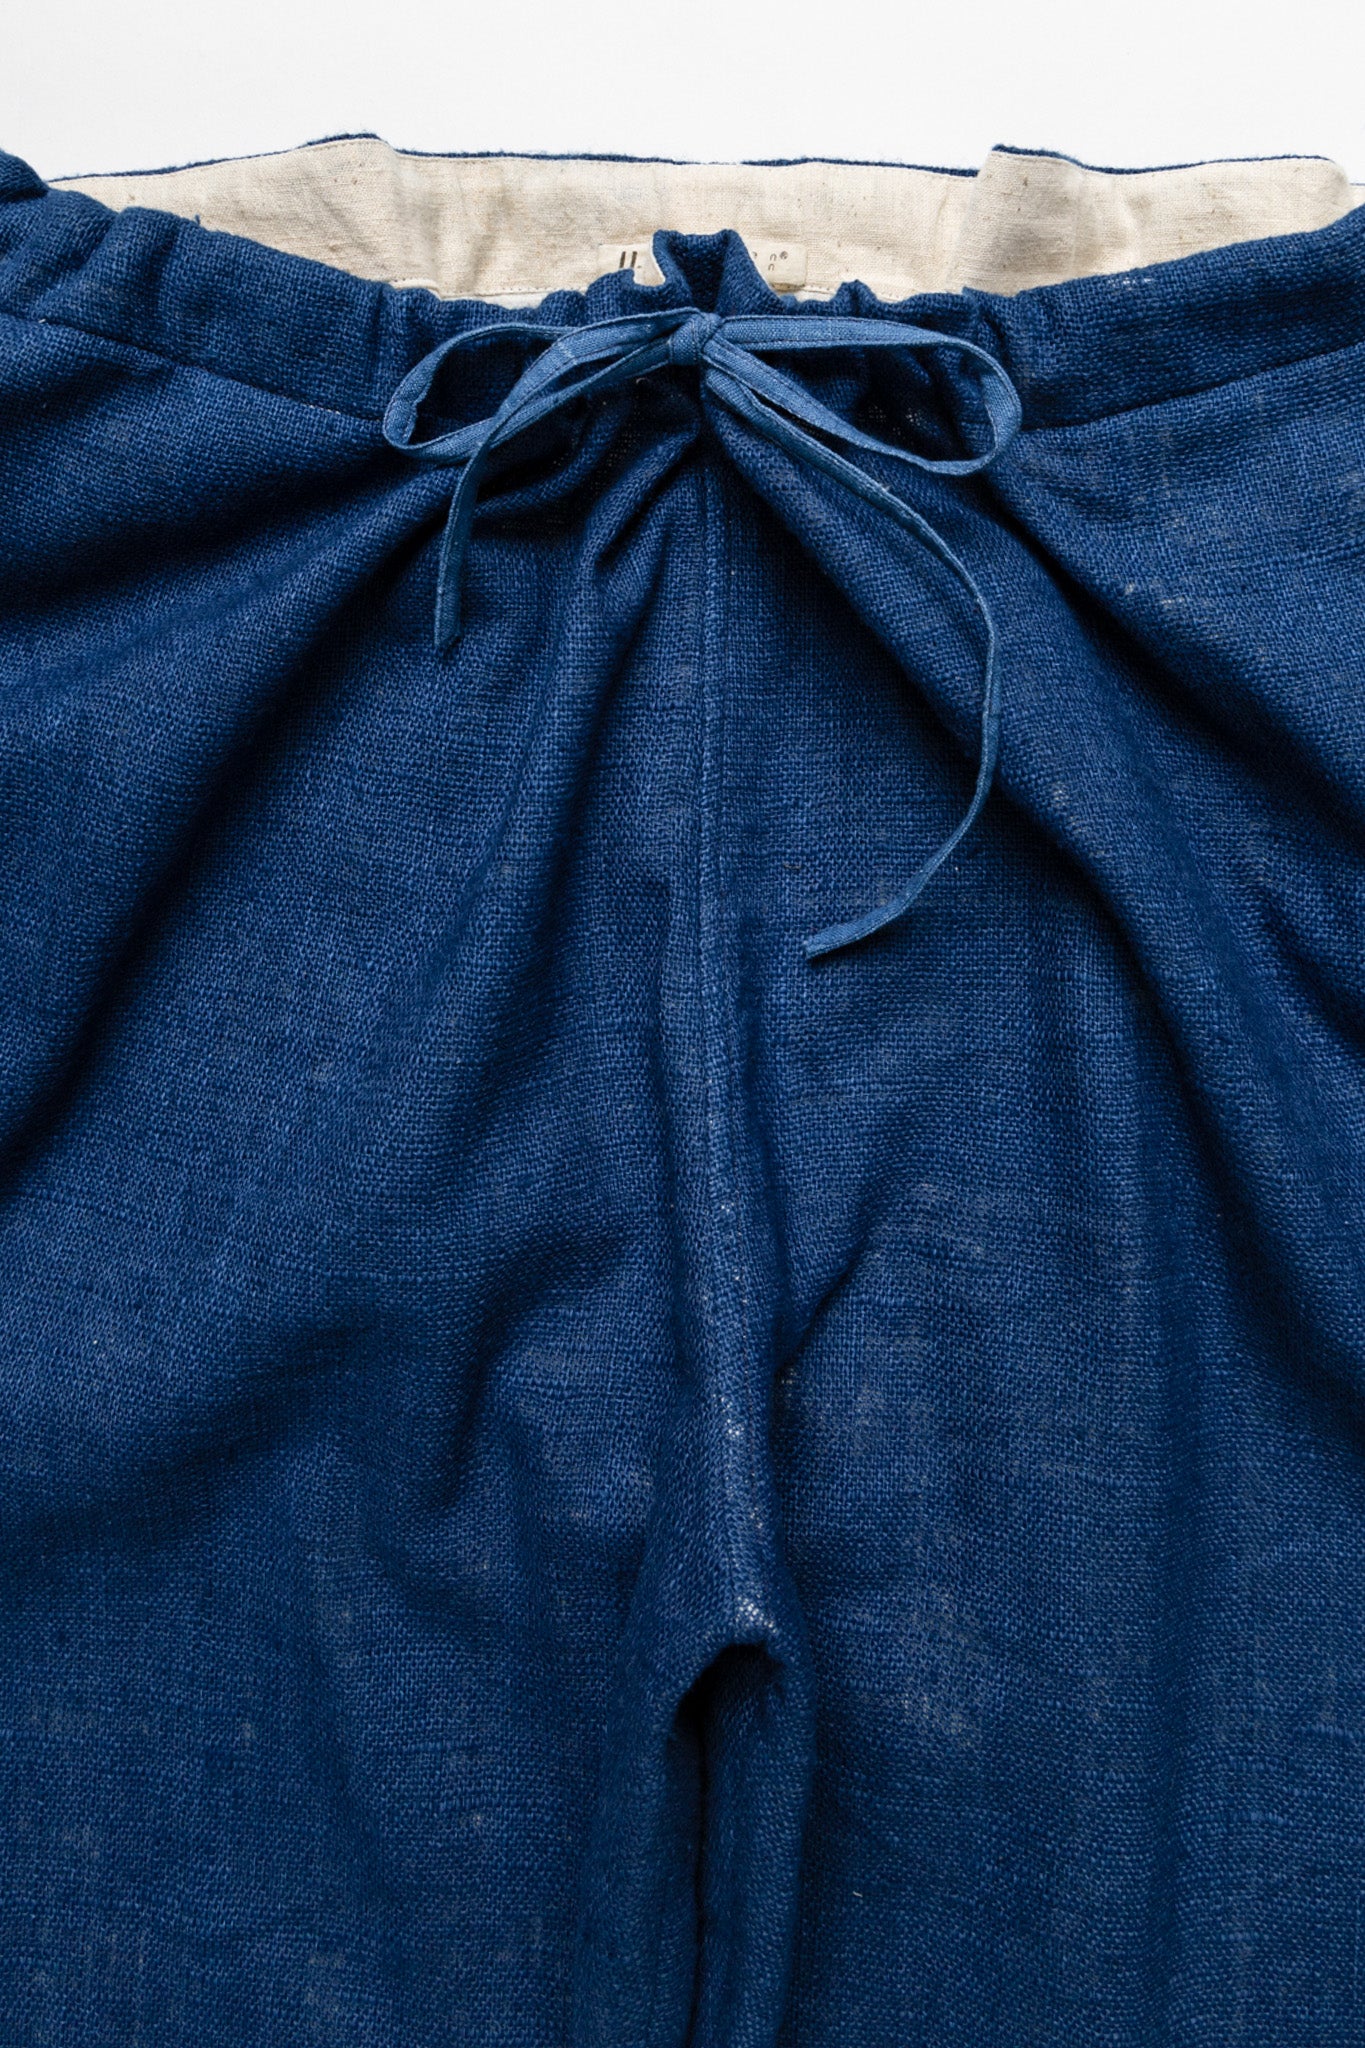 String Pants - Medium Indigo